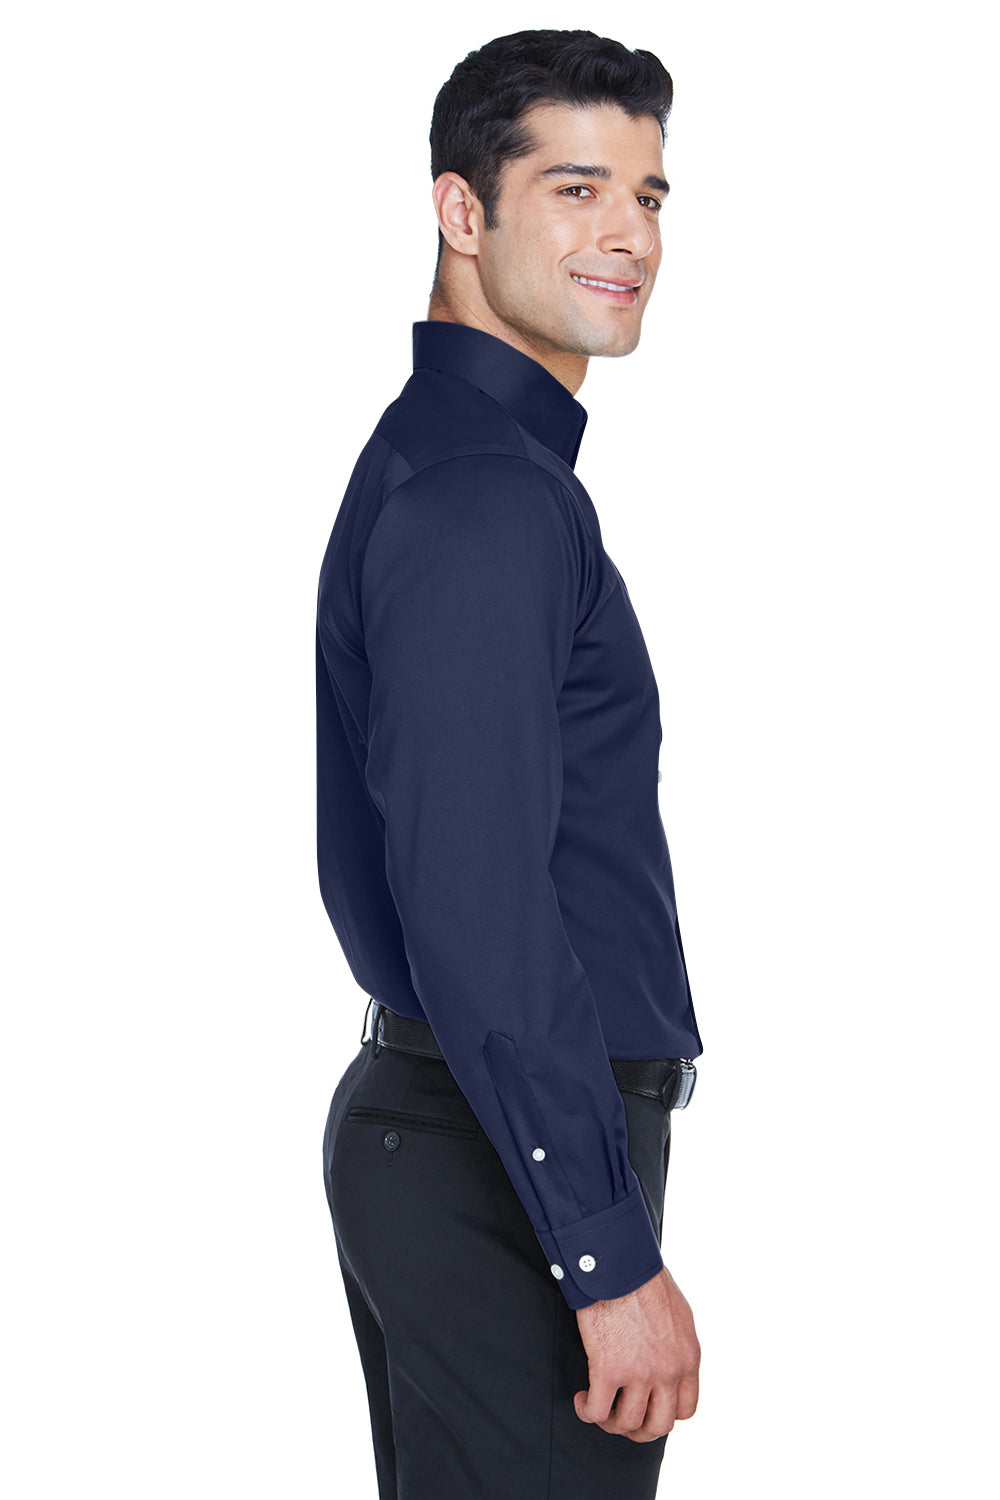 Devon & Jones DG530 Mens Crown Woven Collection Wrinkle Resistant Long Sleeve Button Down Shirt w/ Pocket Navy Blue Side